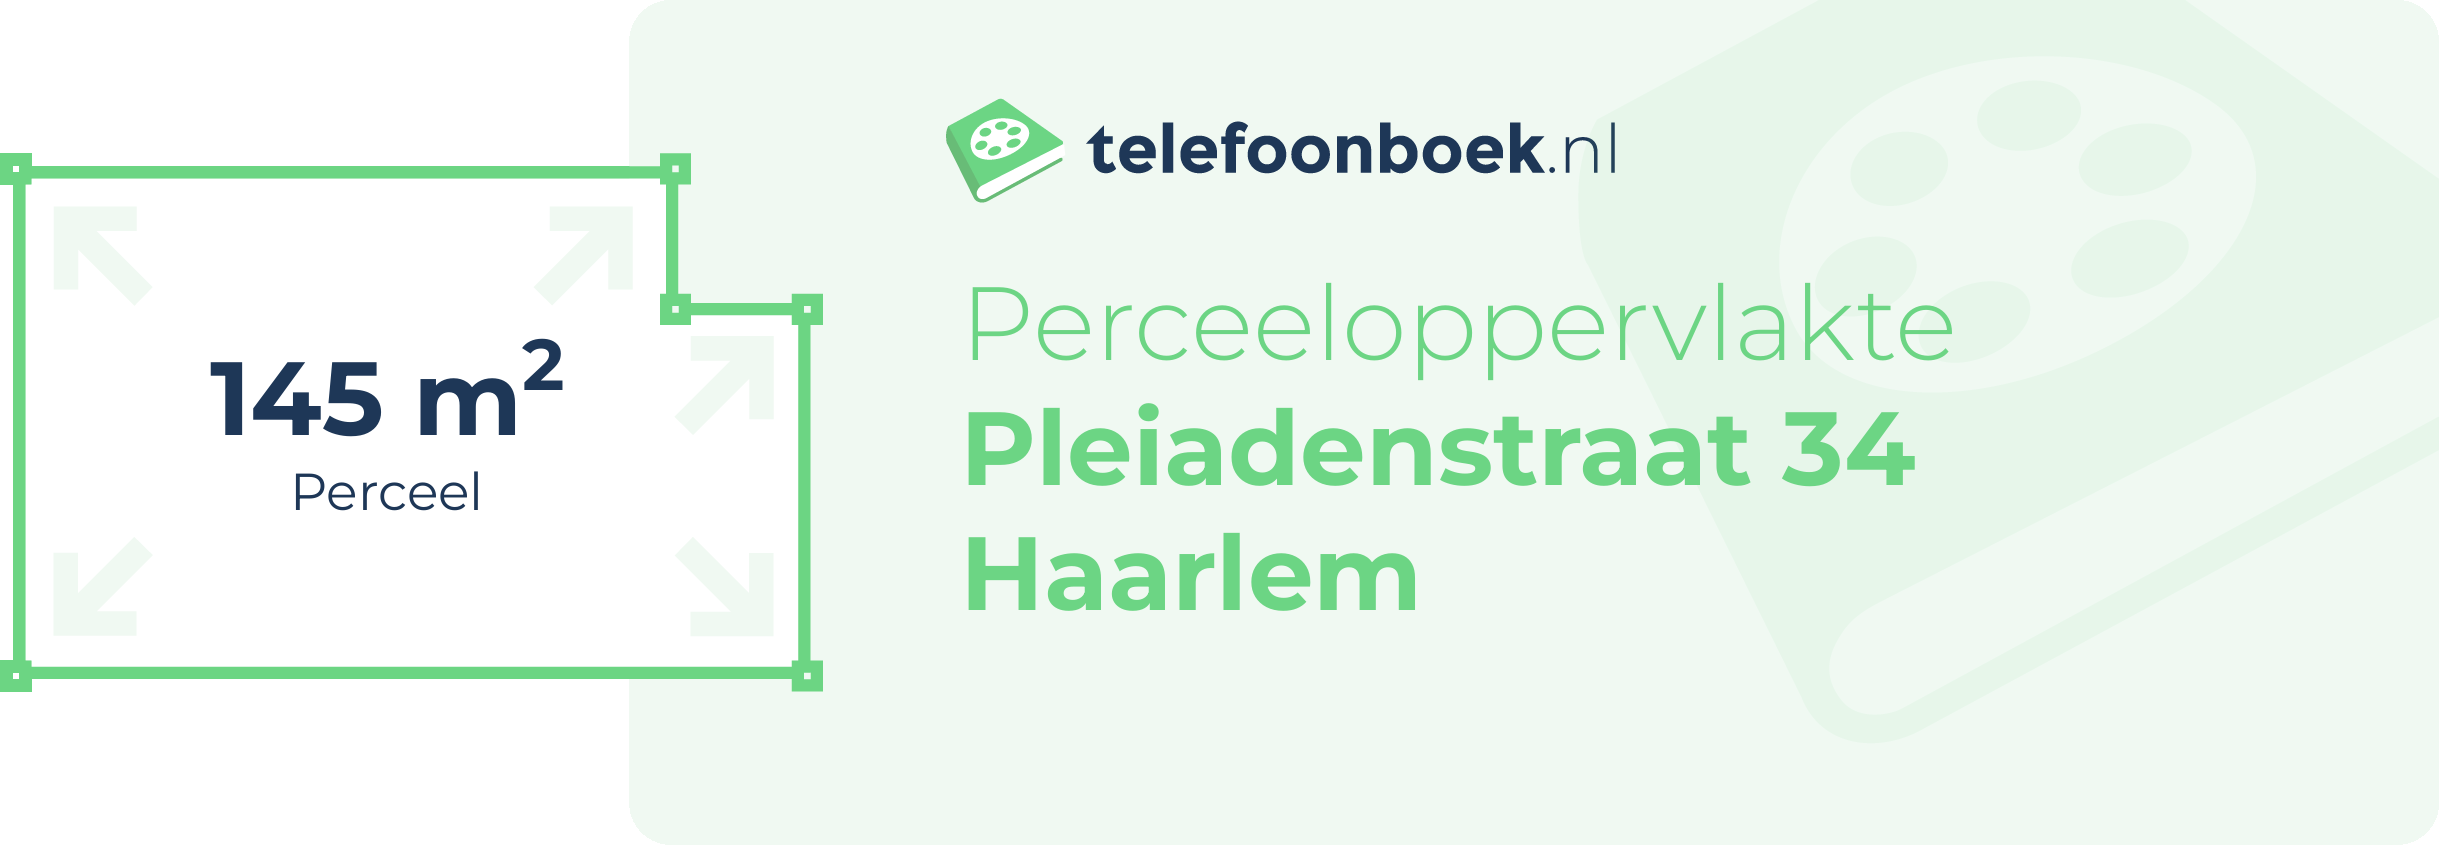 Perceeloppervlakte Pleiadenstraat 34 Haarlem